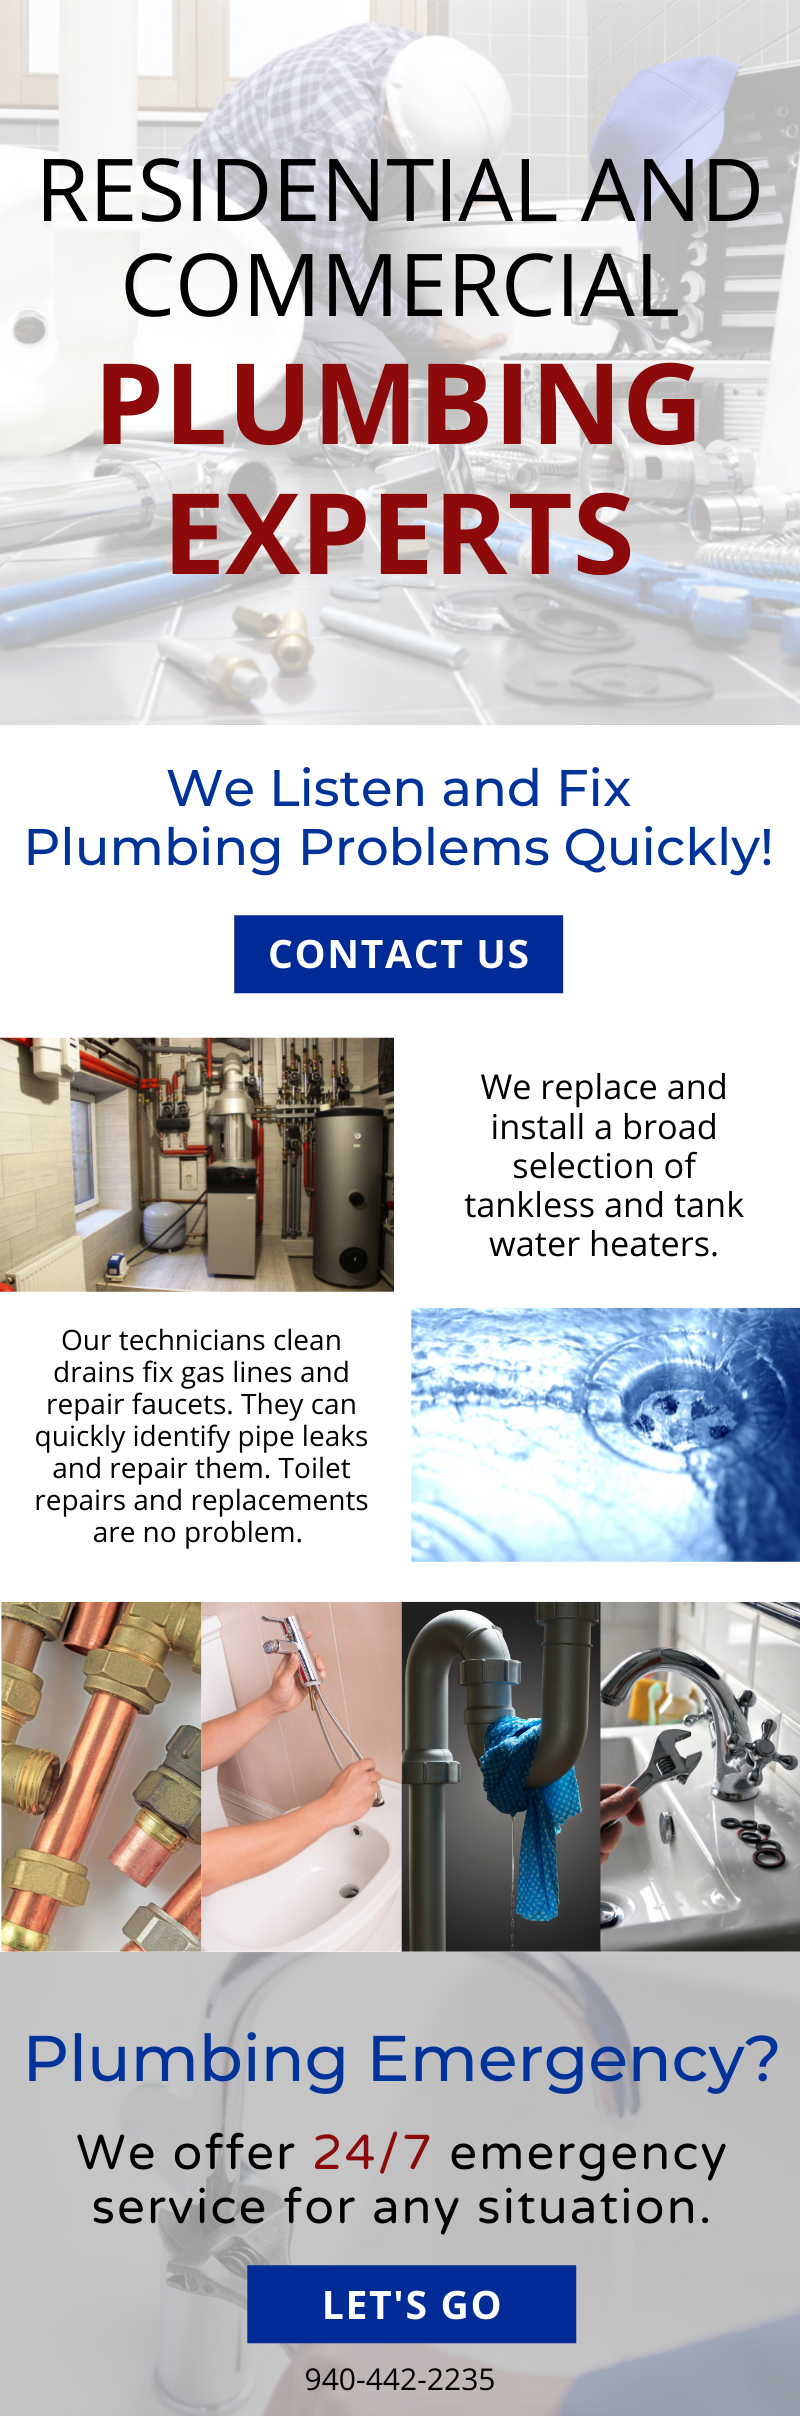 plumbing experts infographic